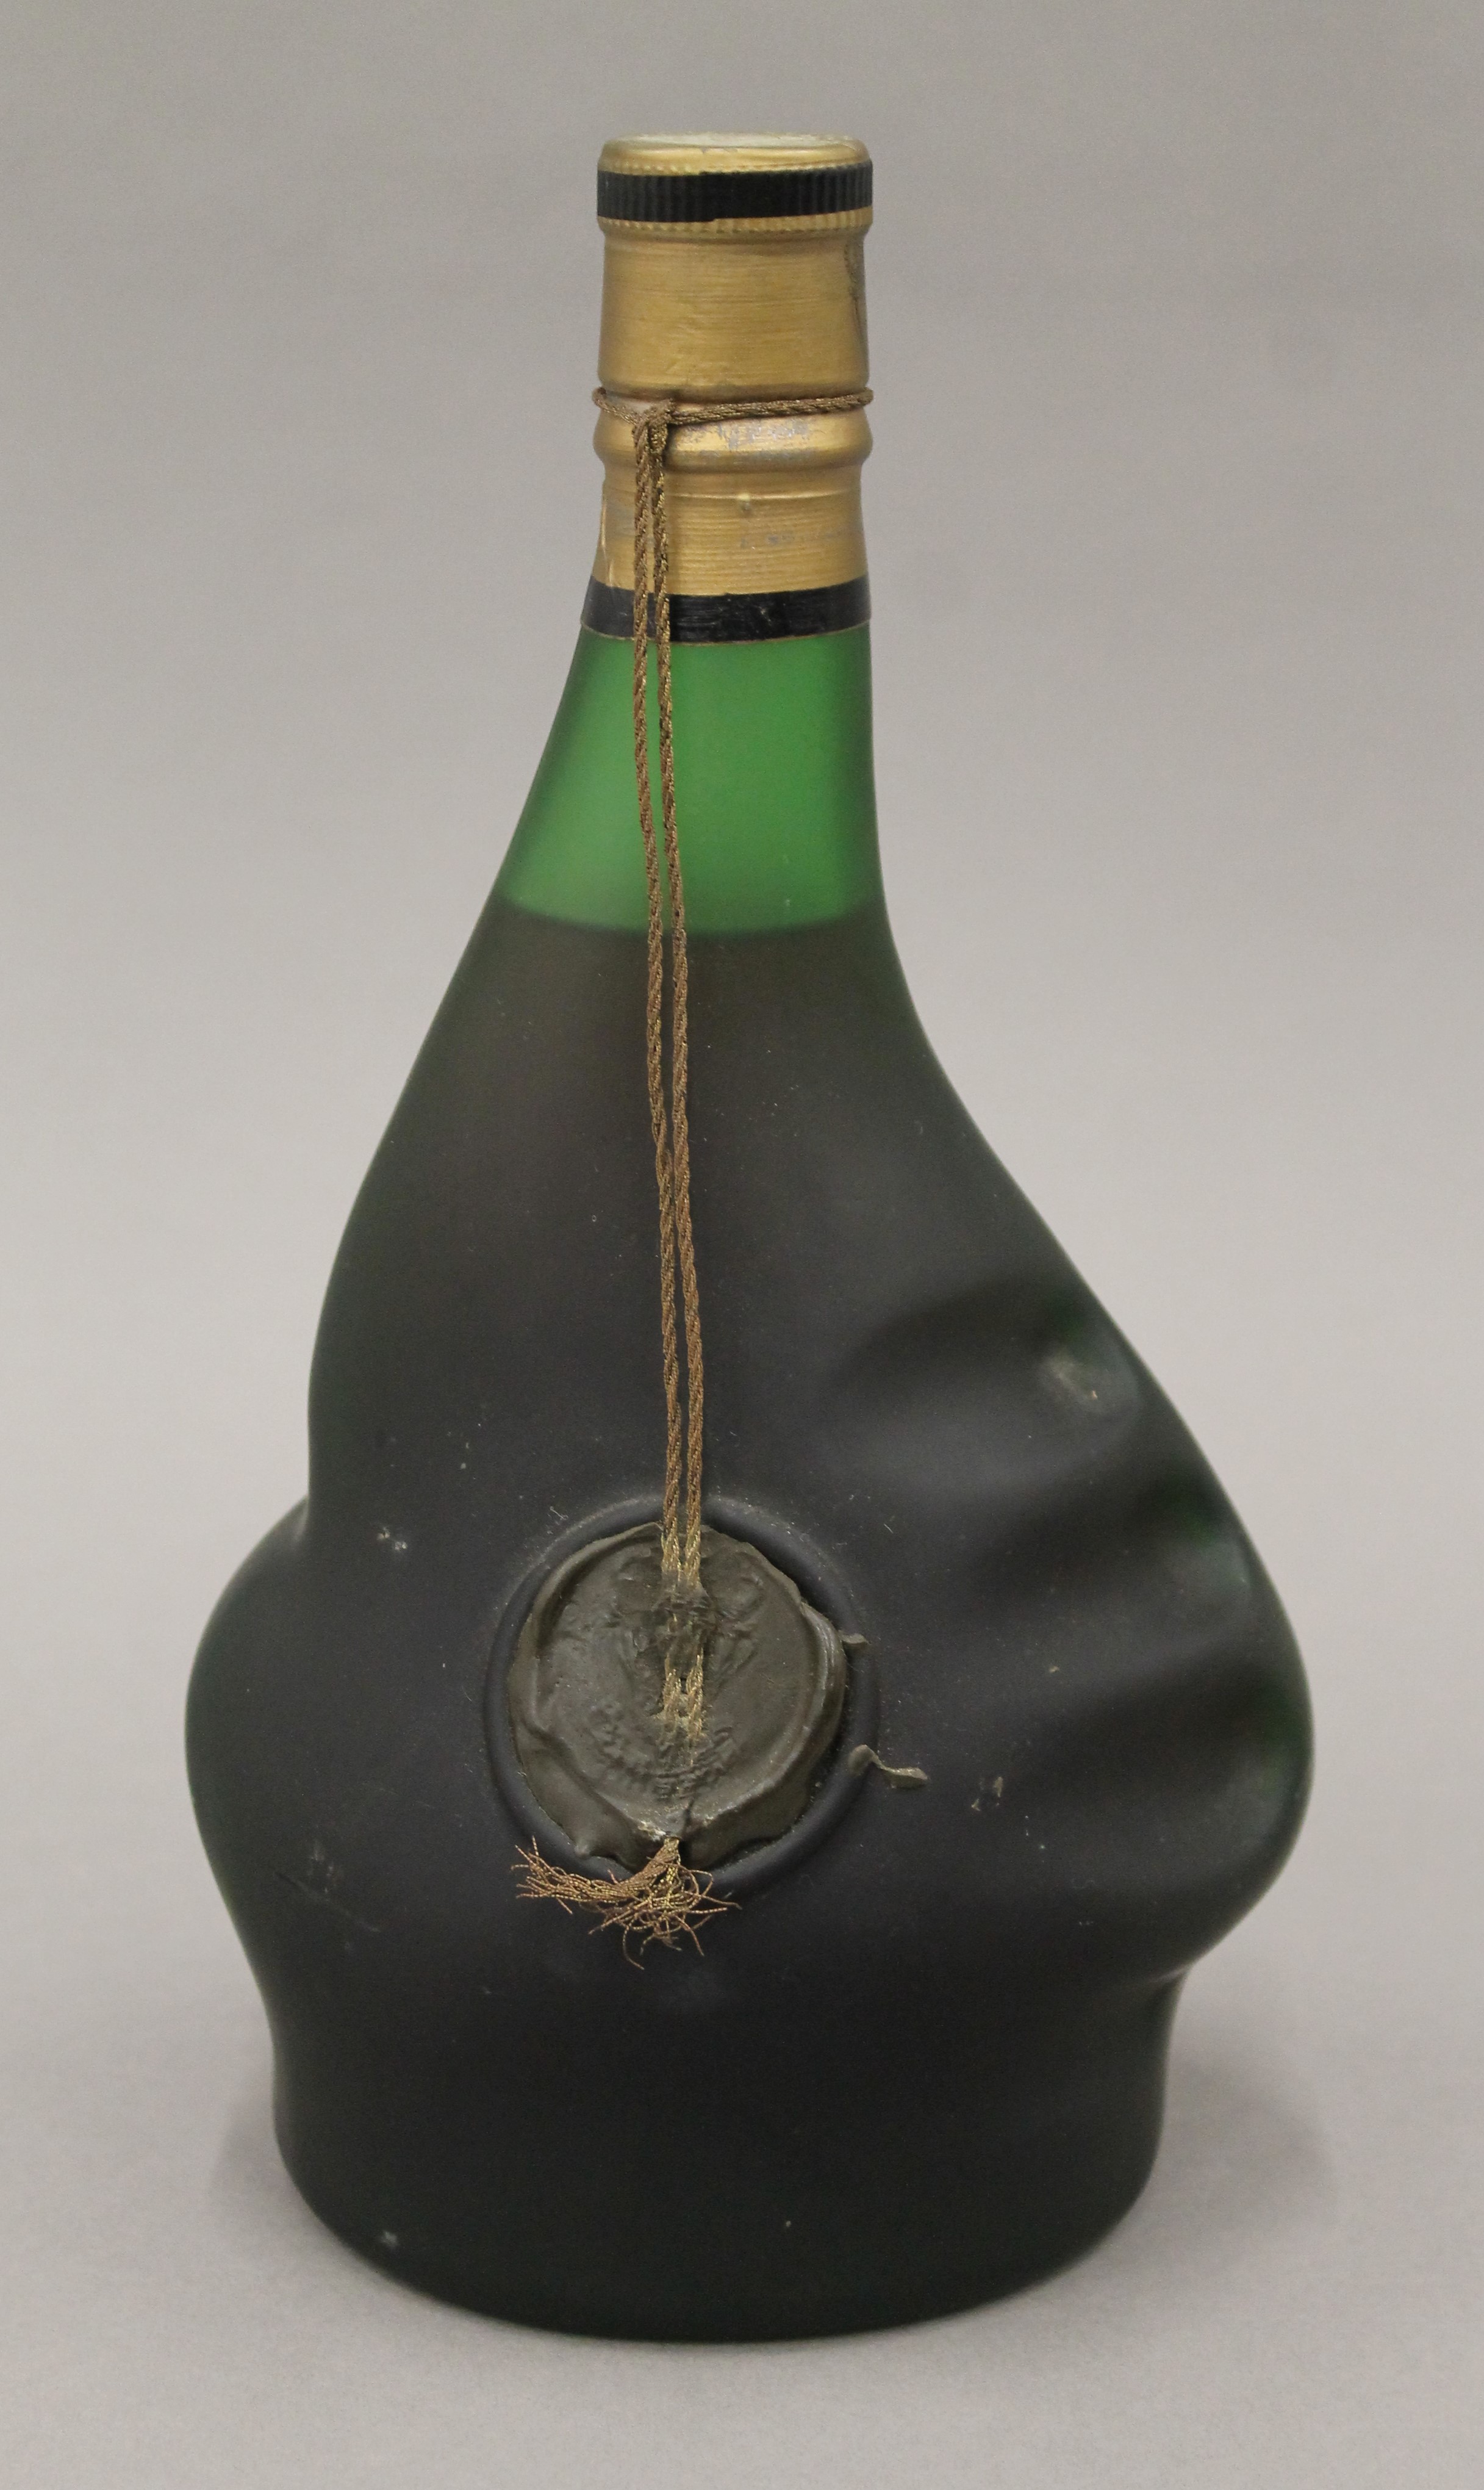 A bottle of Aguardente Antiquissima Reserva Velha.